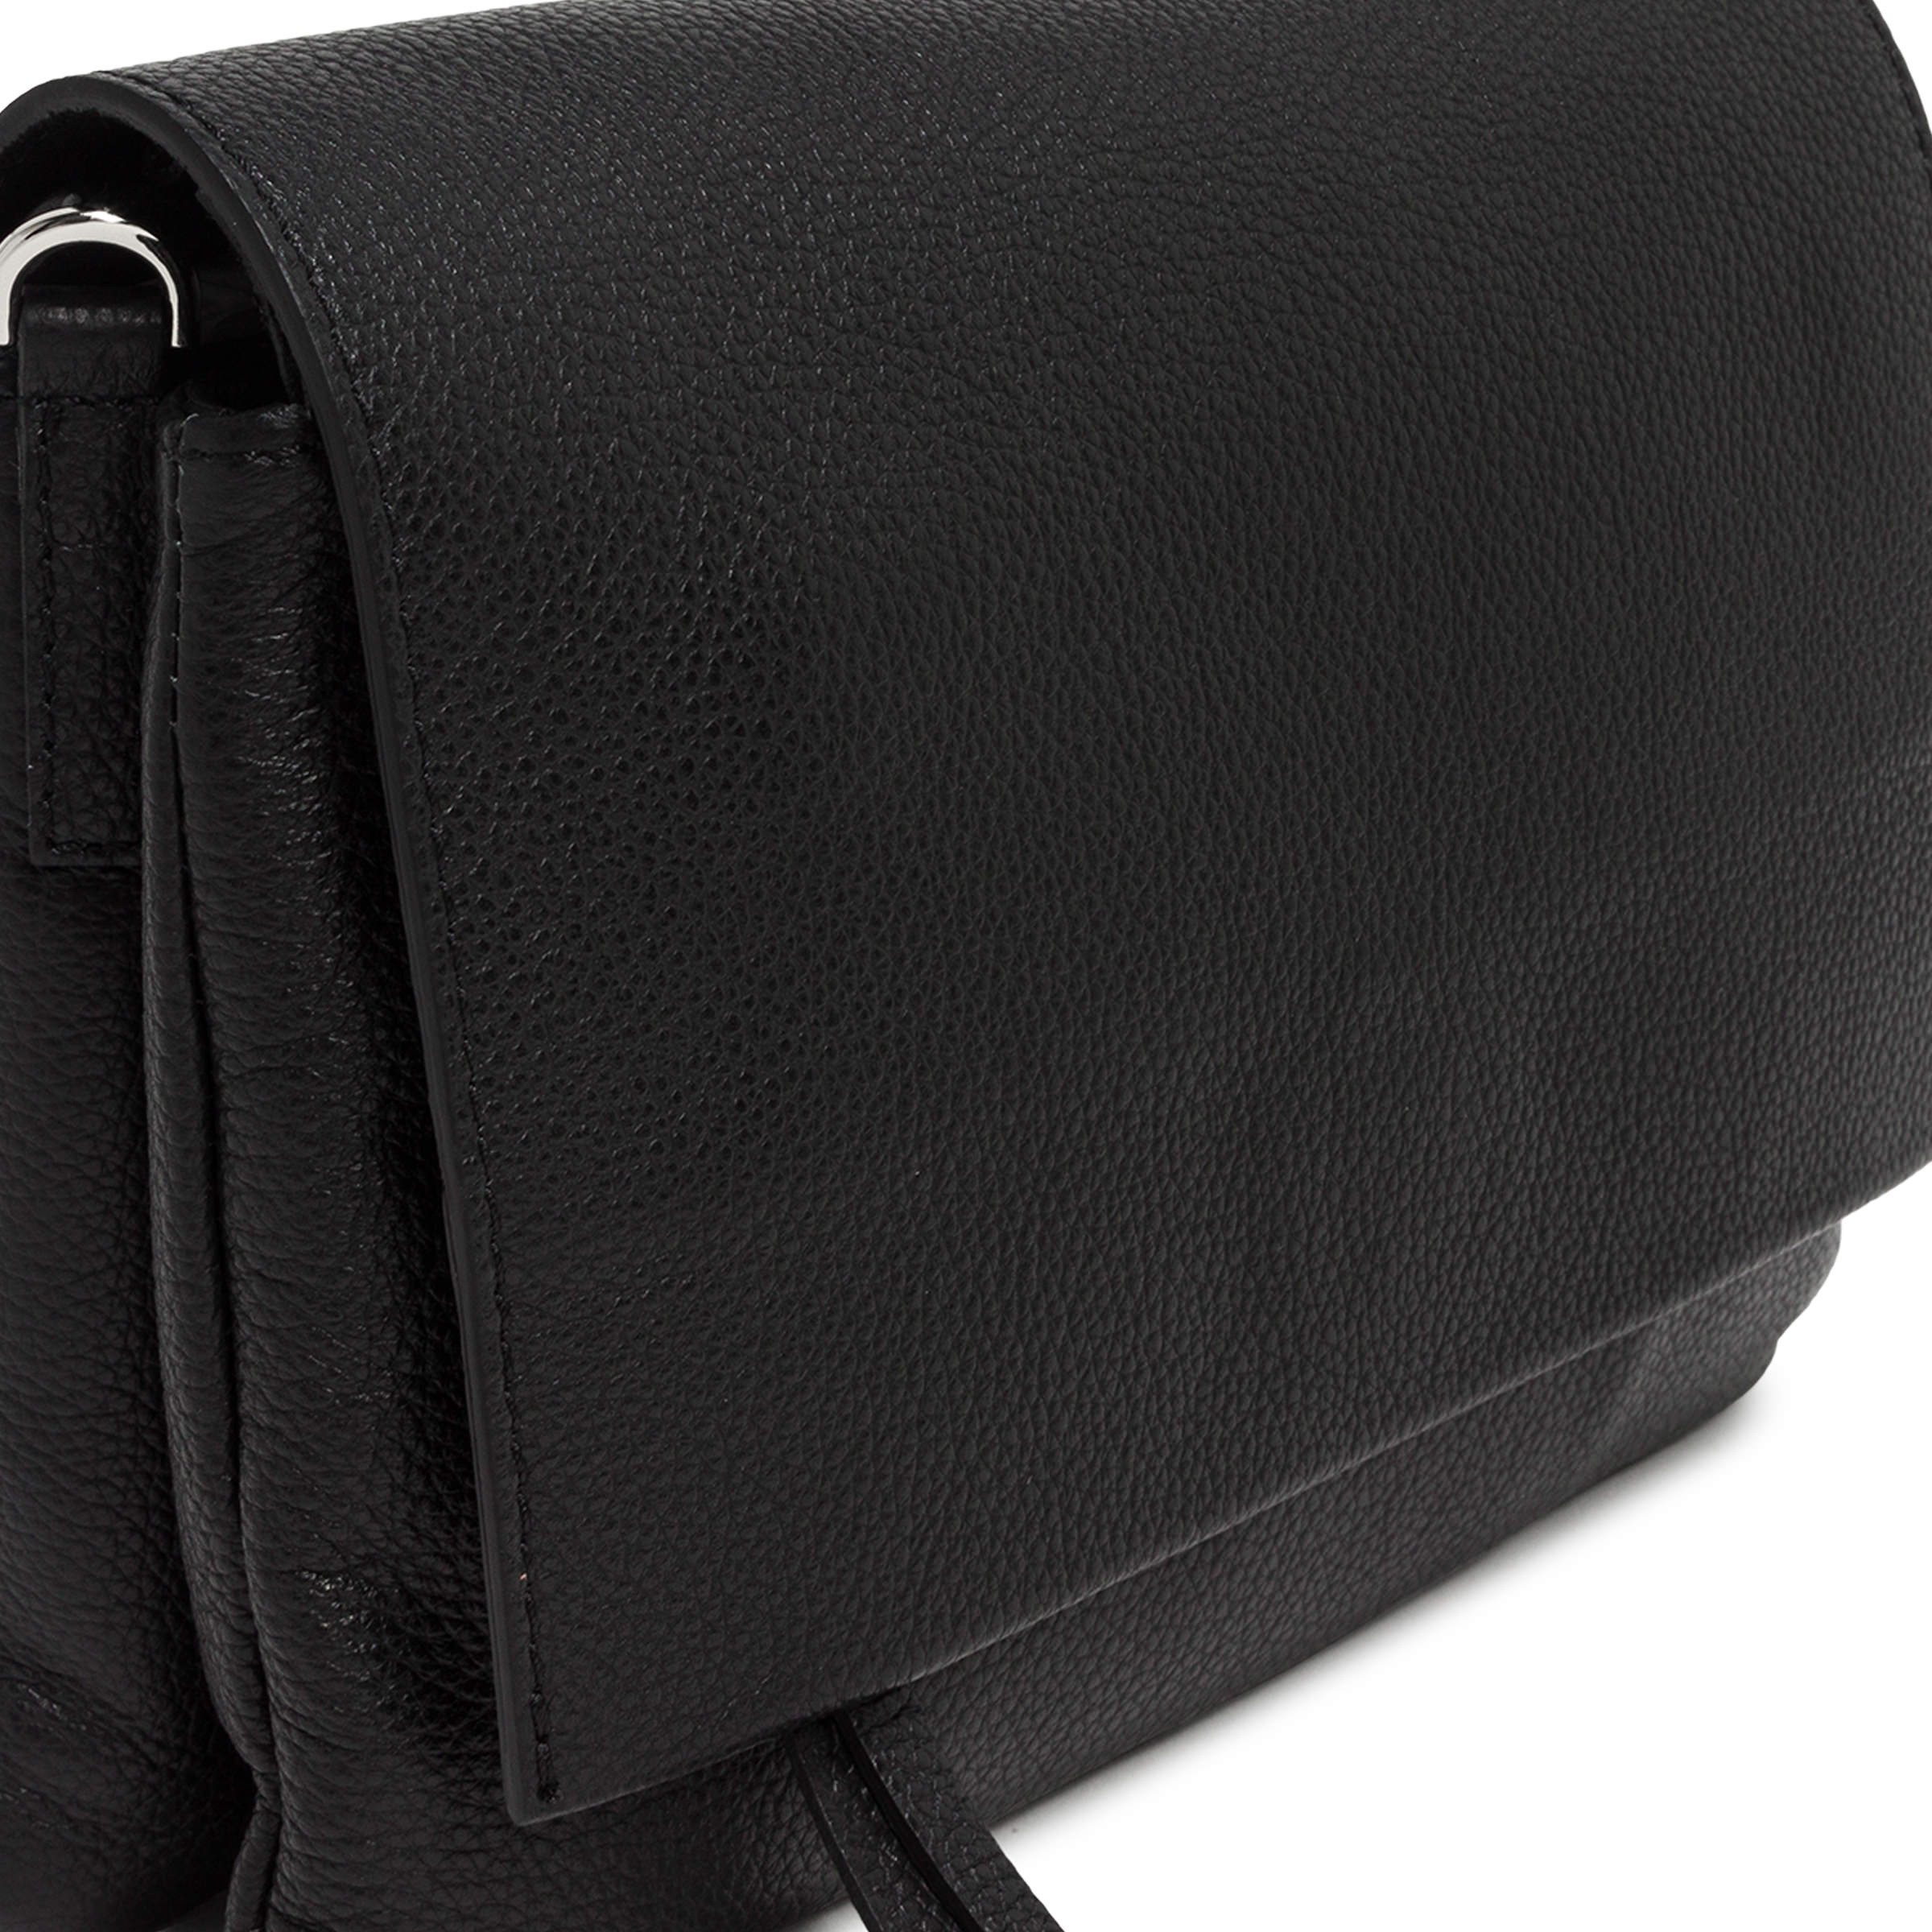 Gianni Chiarini - Three leather bag, Black, large image number 3